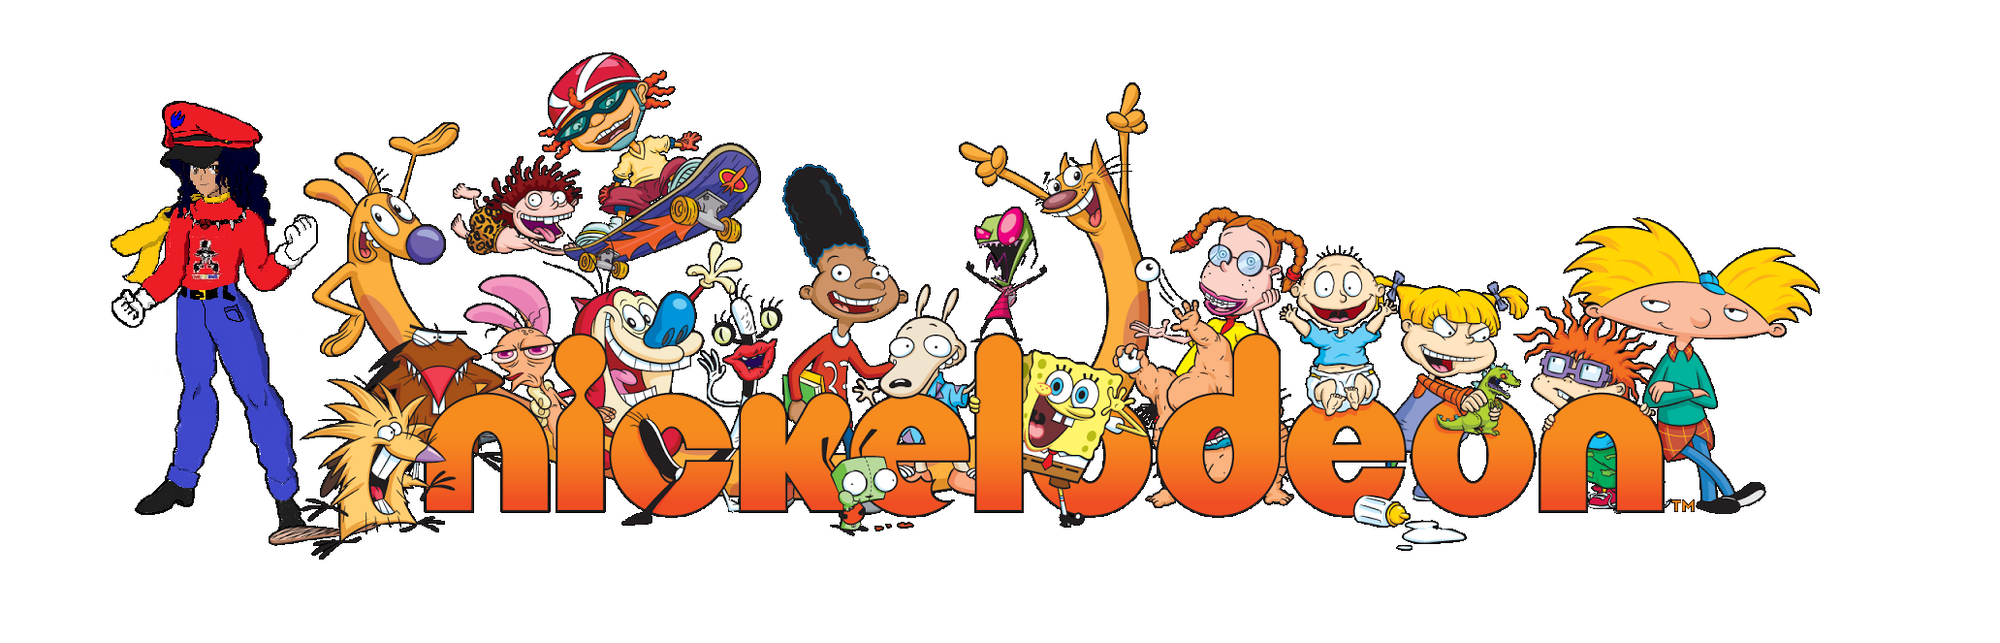 Category:Nickelodeon characters | Nickelodeon Movies Wiki | Fandom